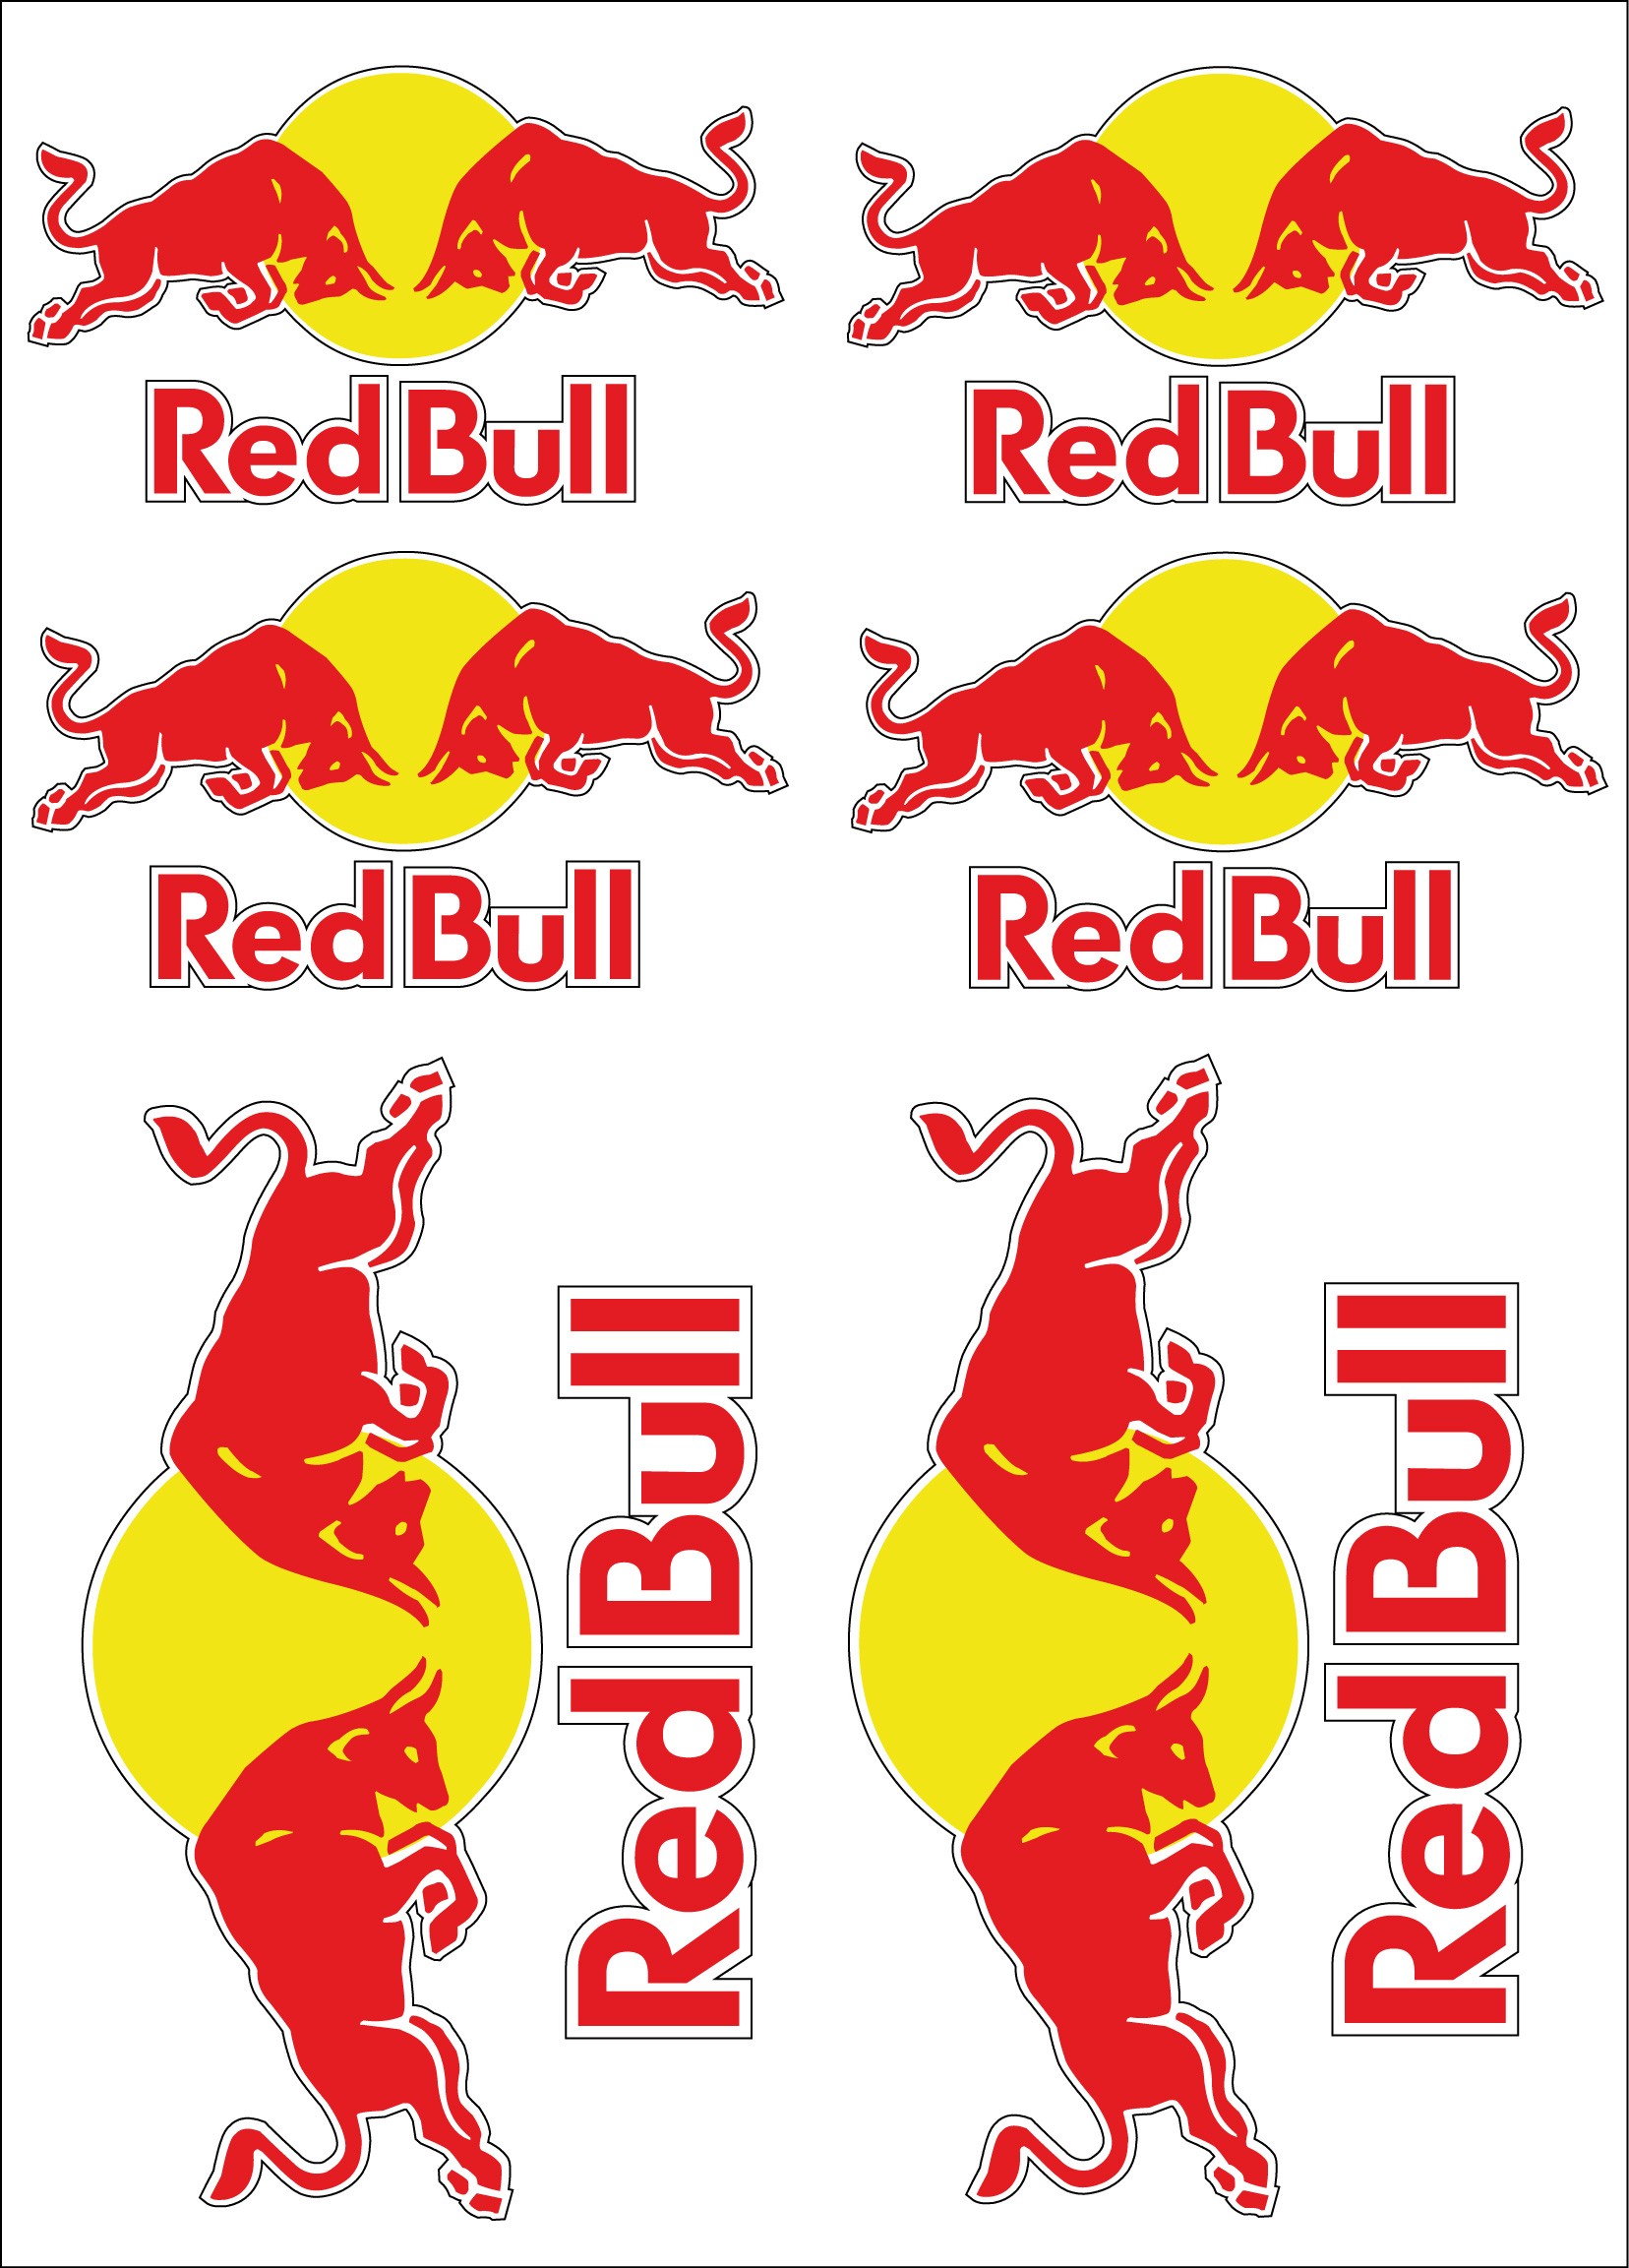 Sticker autocollant red bull - Équipement moto